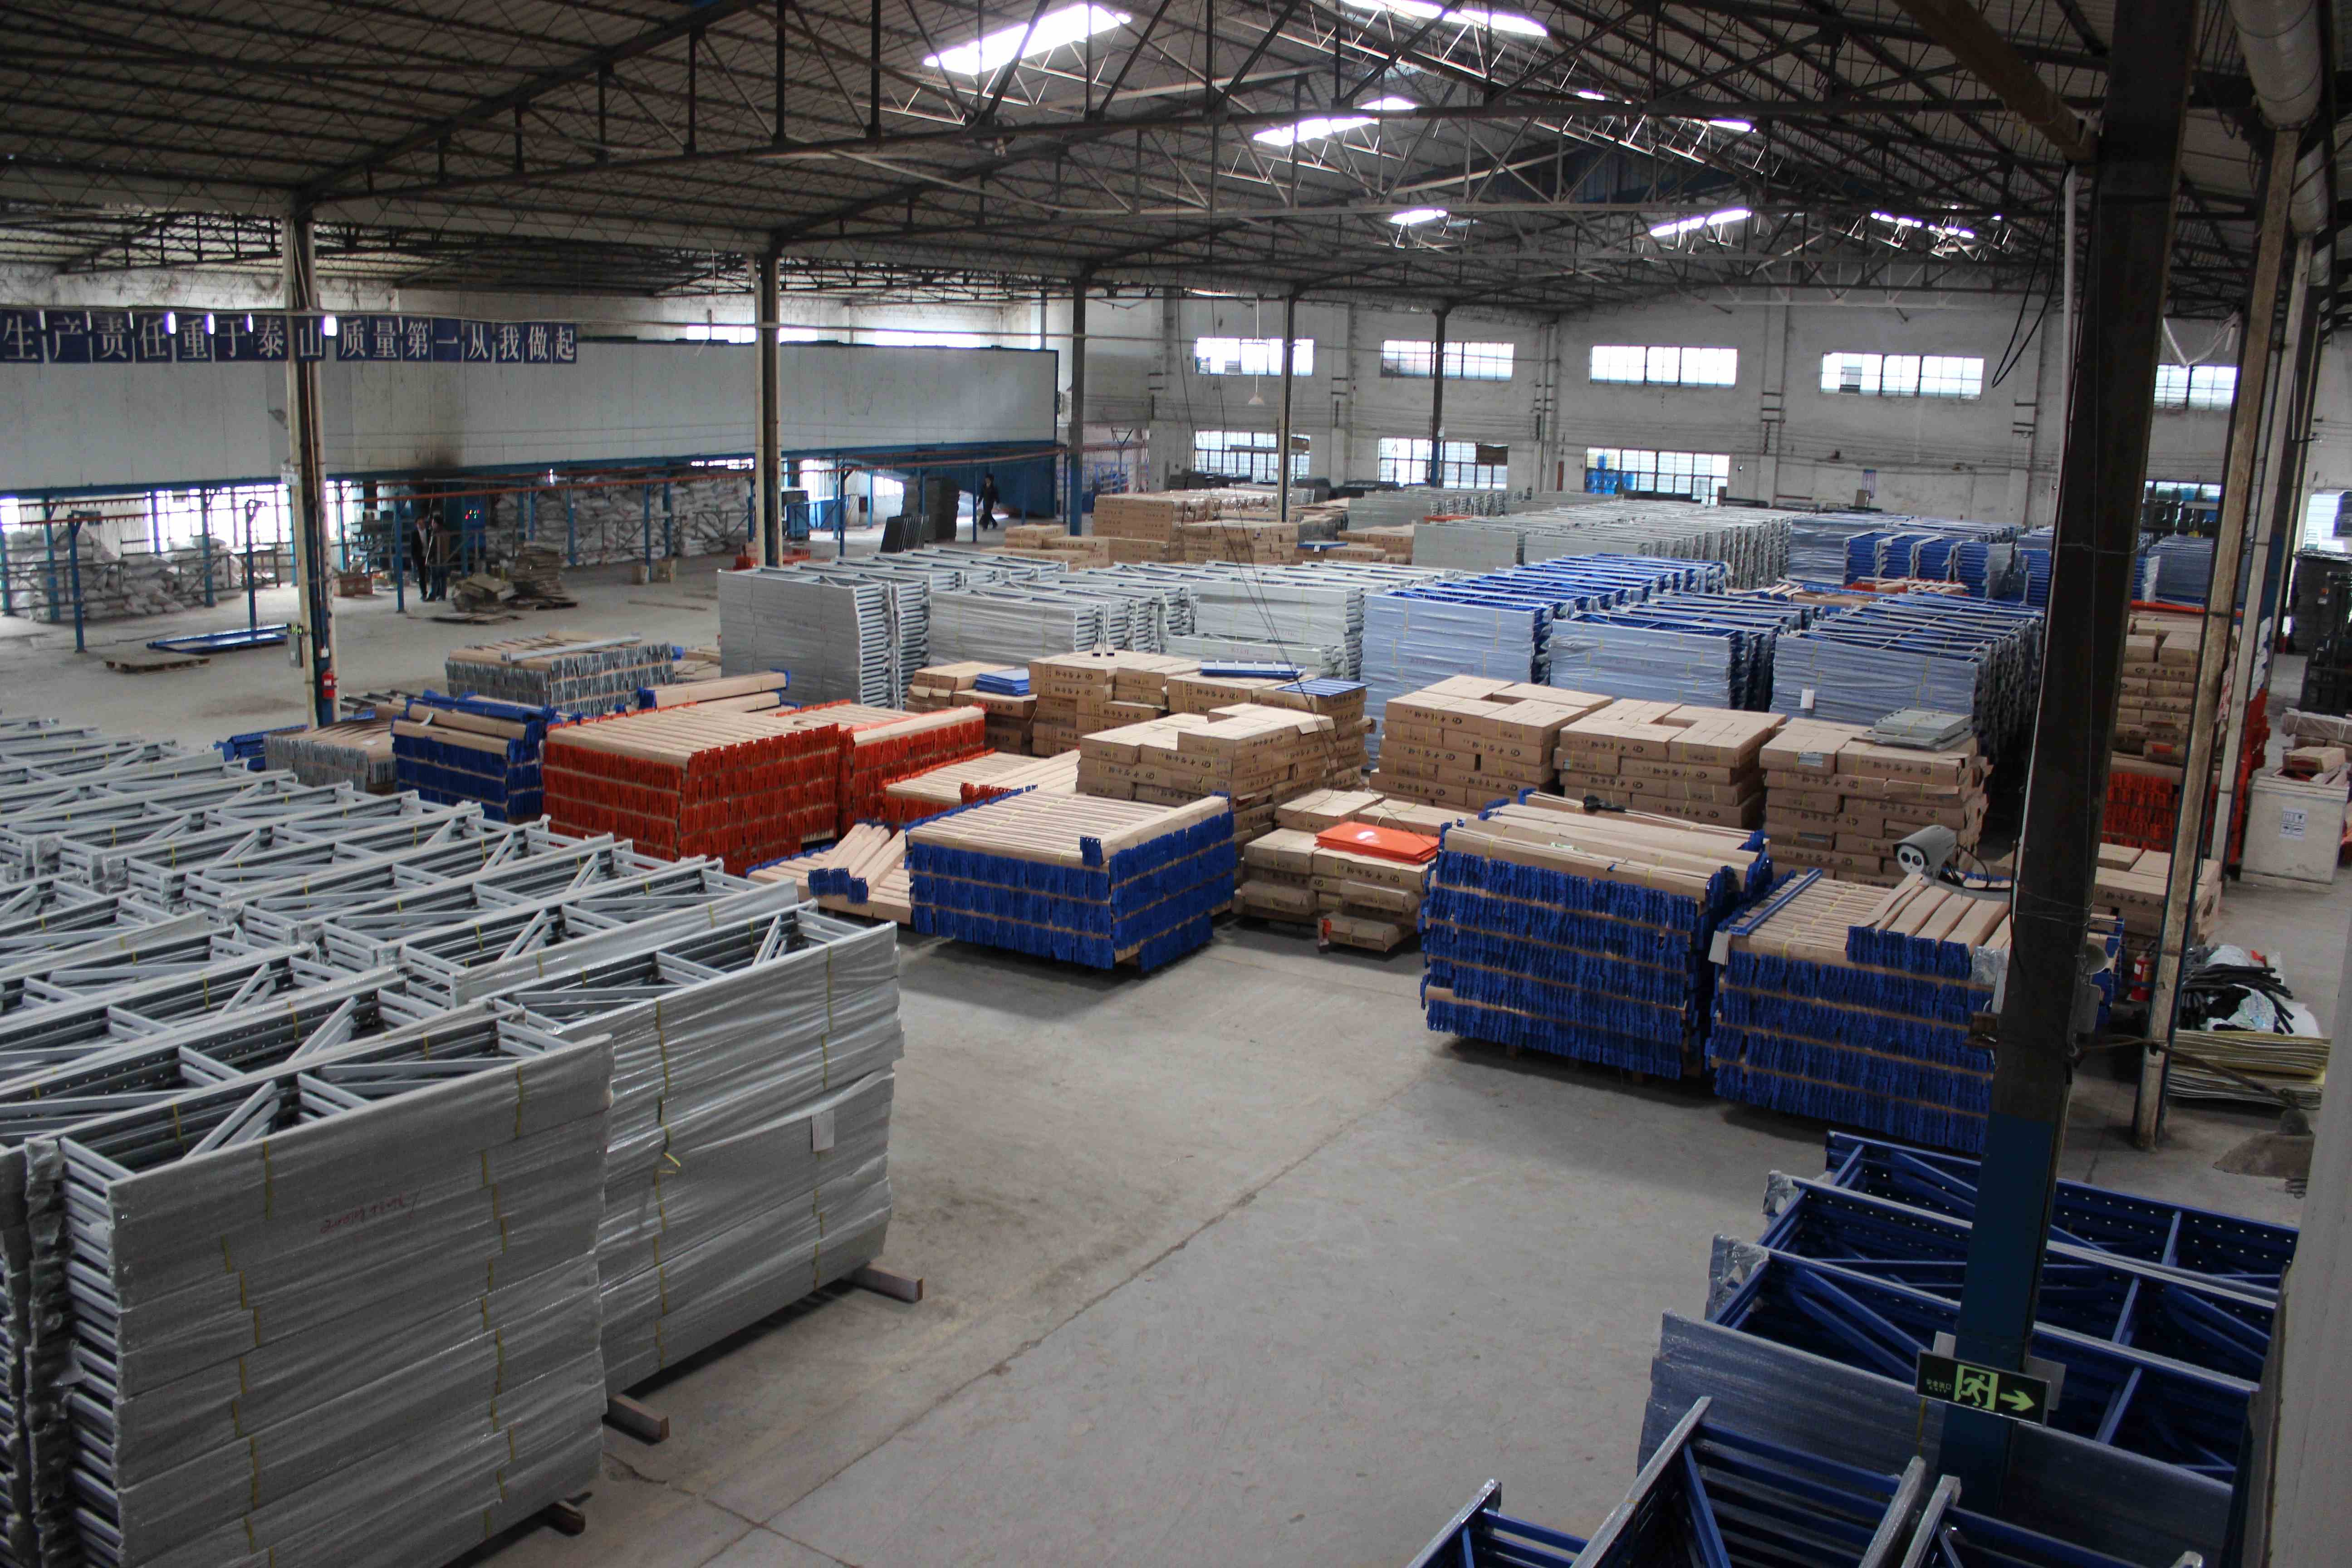 Logística industrial estantería de servicio pesado almacén de acero de alto nivel almacenamiento en estanterías fabricación selectiva de estanterías para paletas